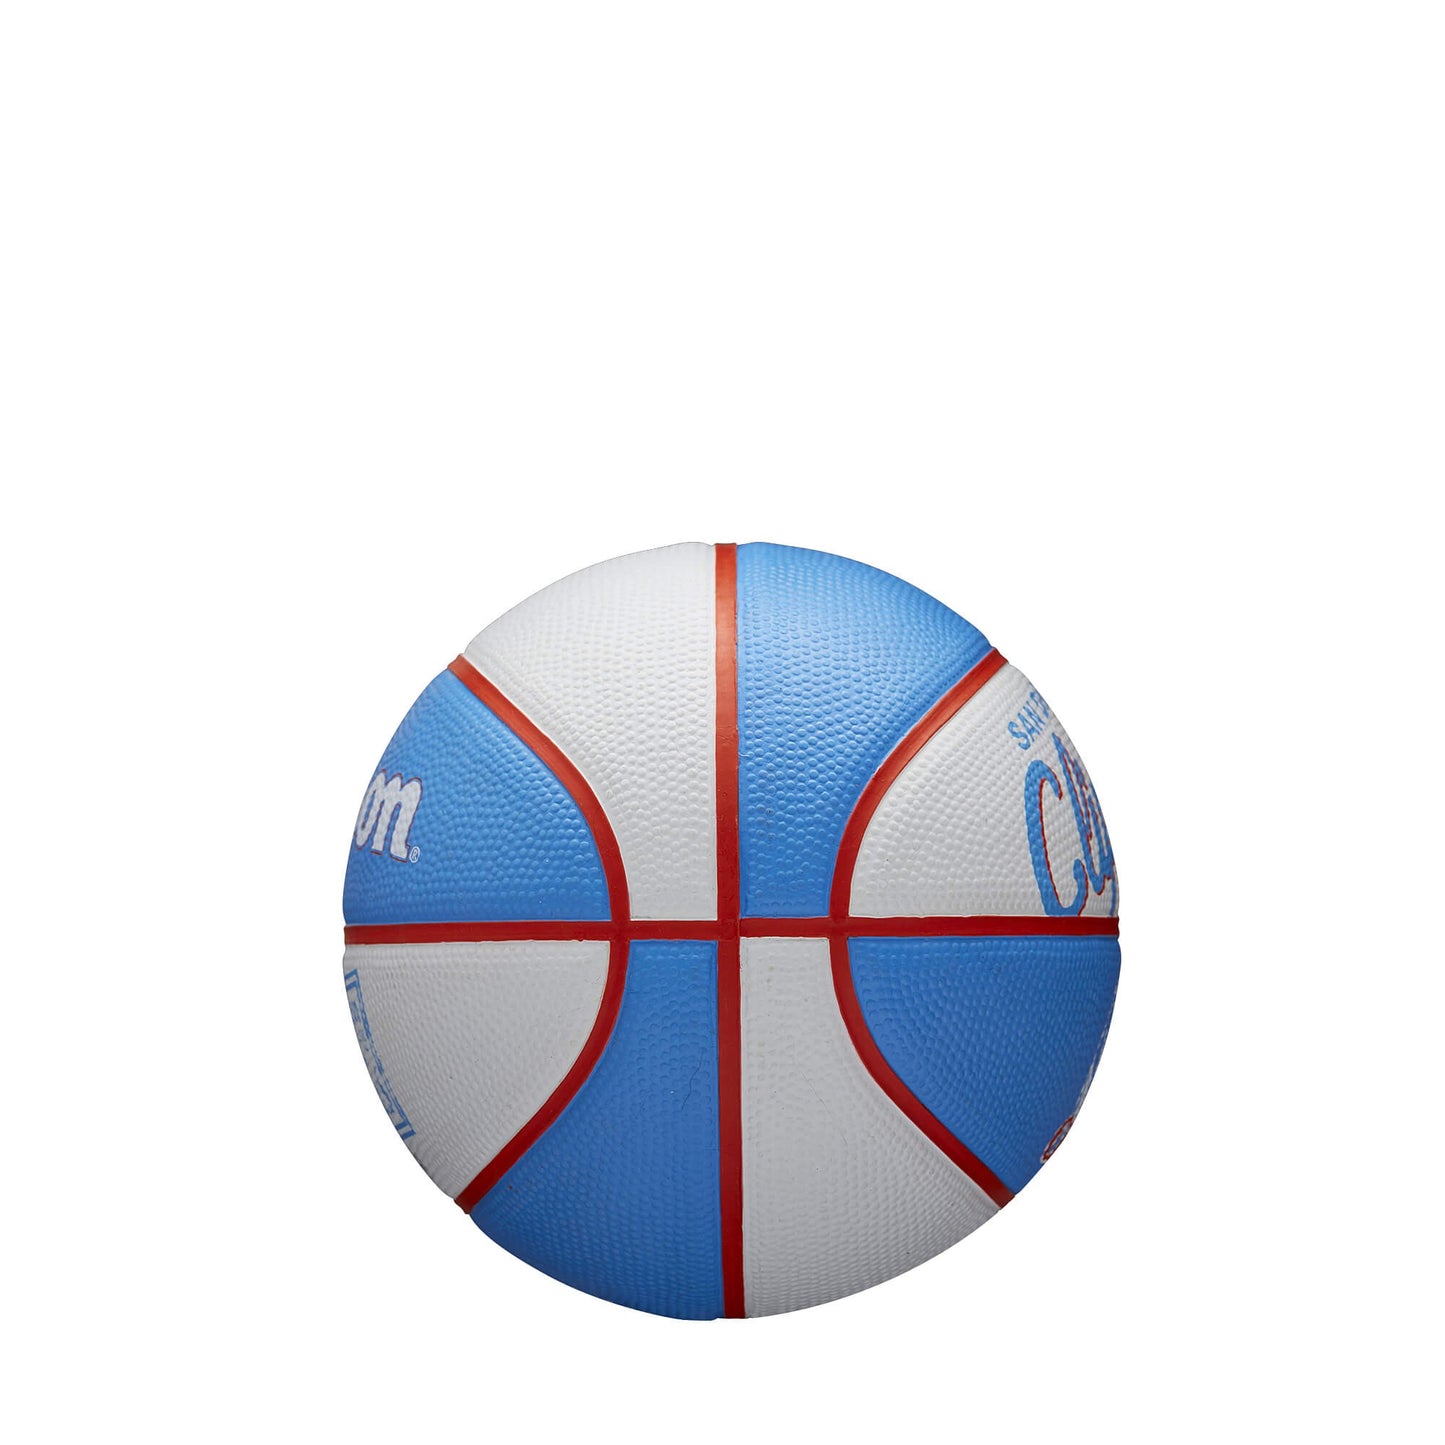 Wilson NBA Team Retro Mini Basketball Los Angeles Clippers (sz. 3)